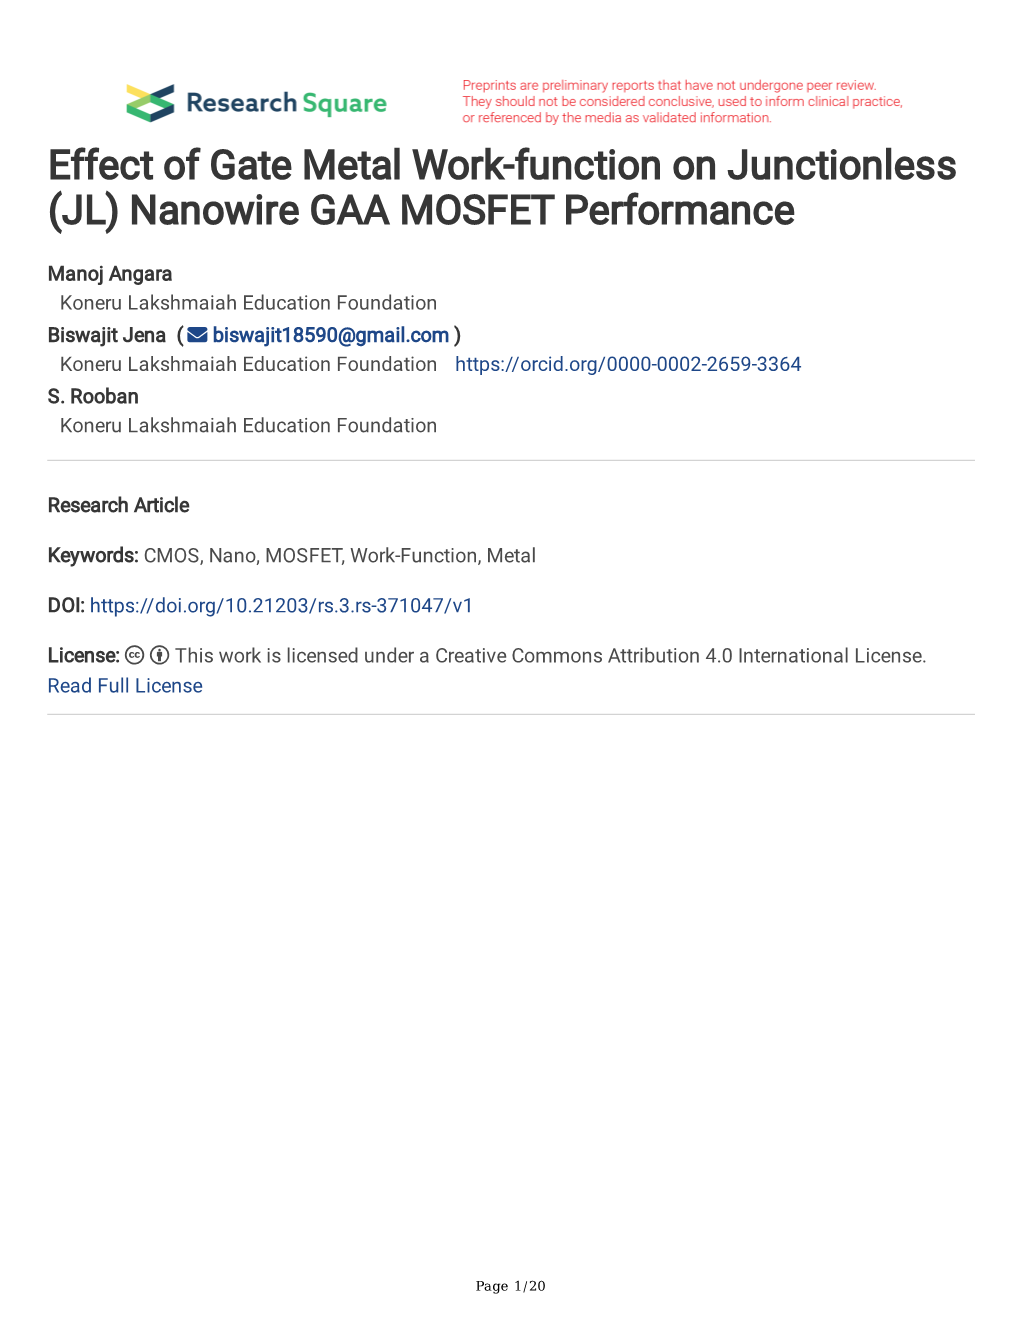 Effect of Gate Metal Work-Function on Junctionless (JL) Nanowire GAA MOSFET Performance